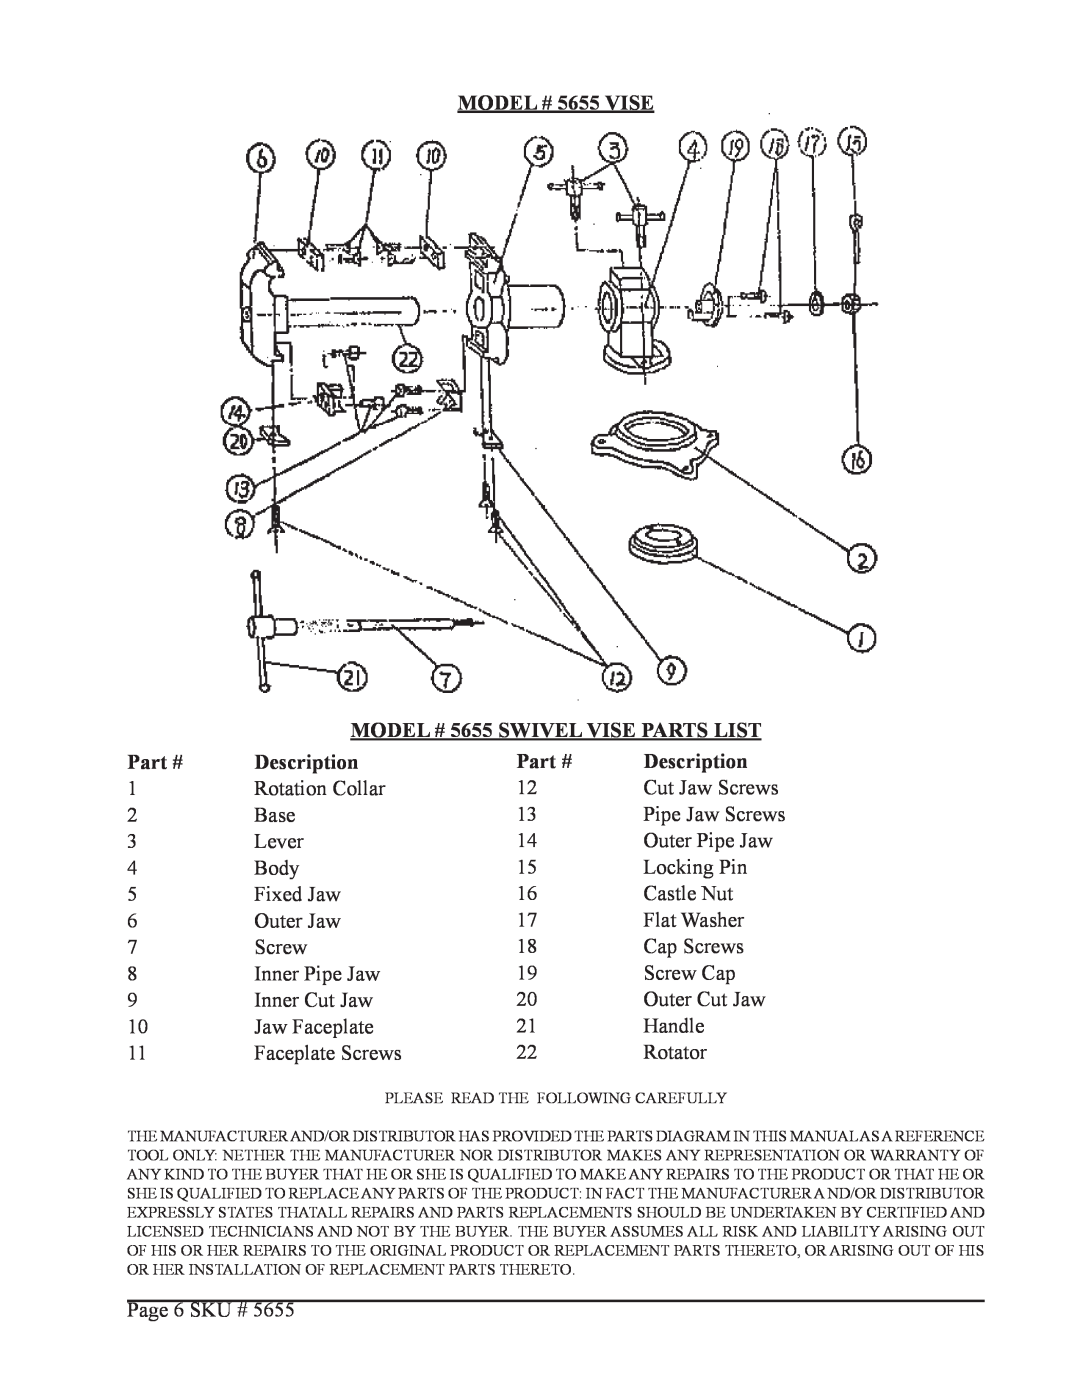 Harbor Freight Tools operating instructions Model # 5655 Vise, Model # 5655 Swivel Vise Parts List, Description 